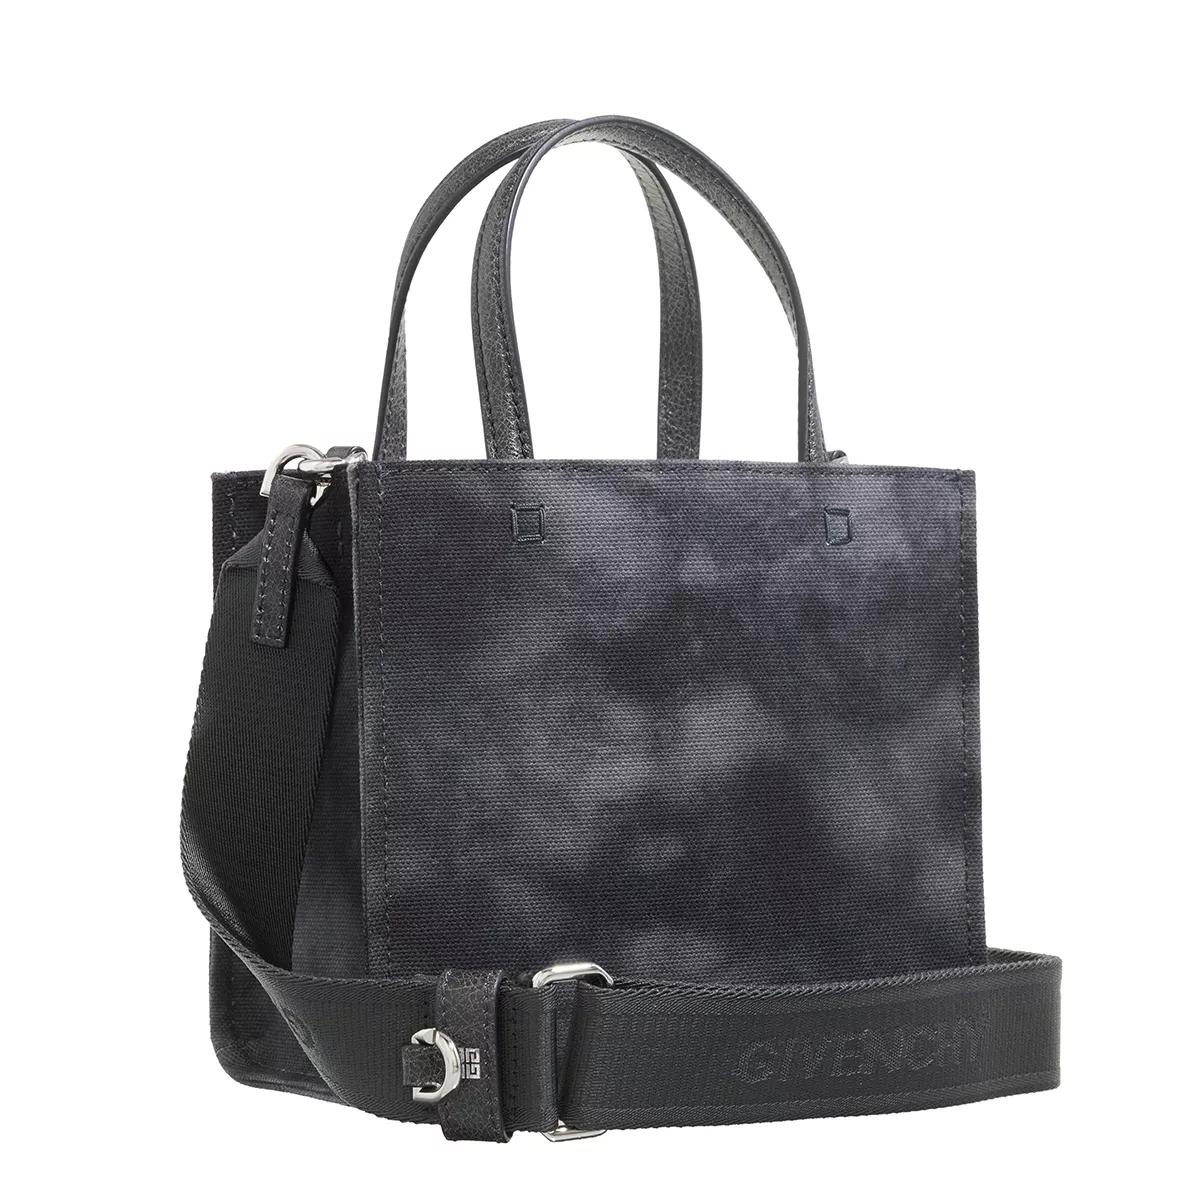 Givenchy Totes Mini G Tote Bag in grijs